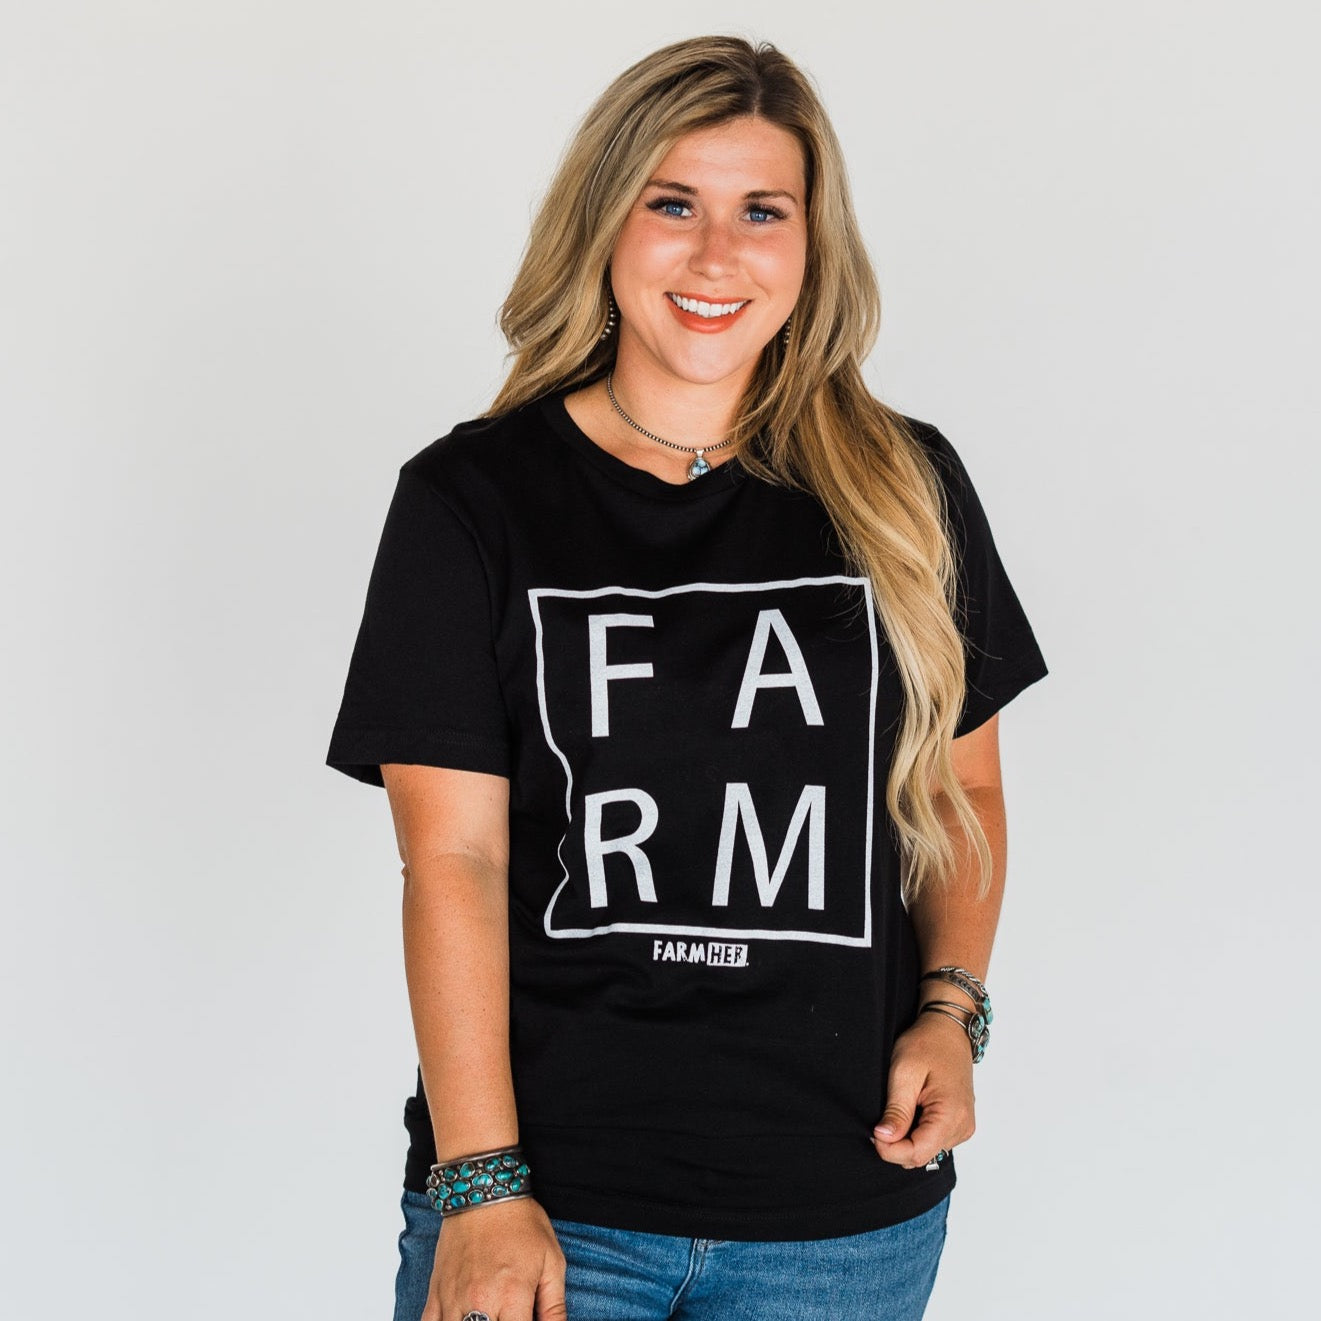 T-Shirt "F A R M" Black FarmHer